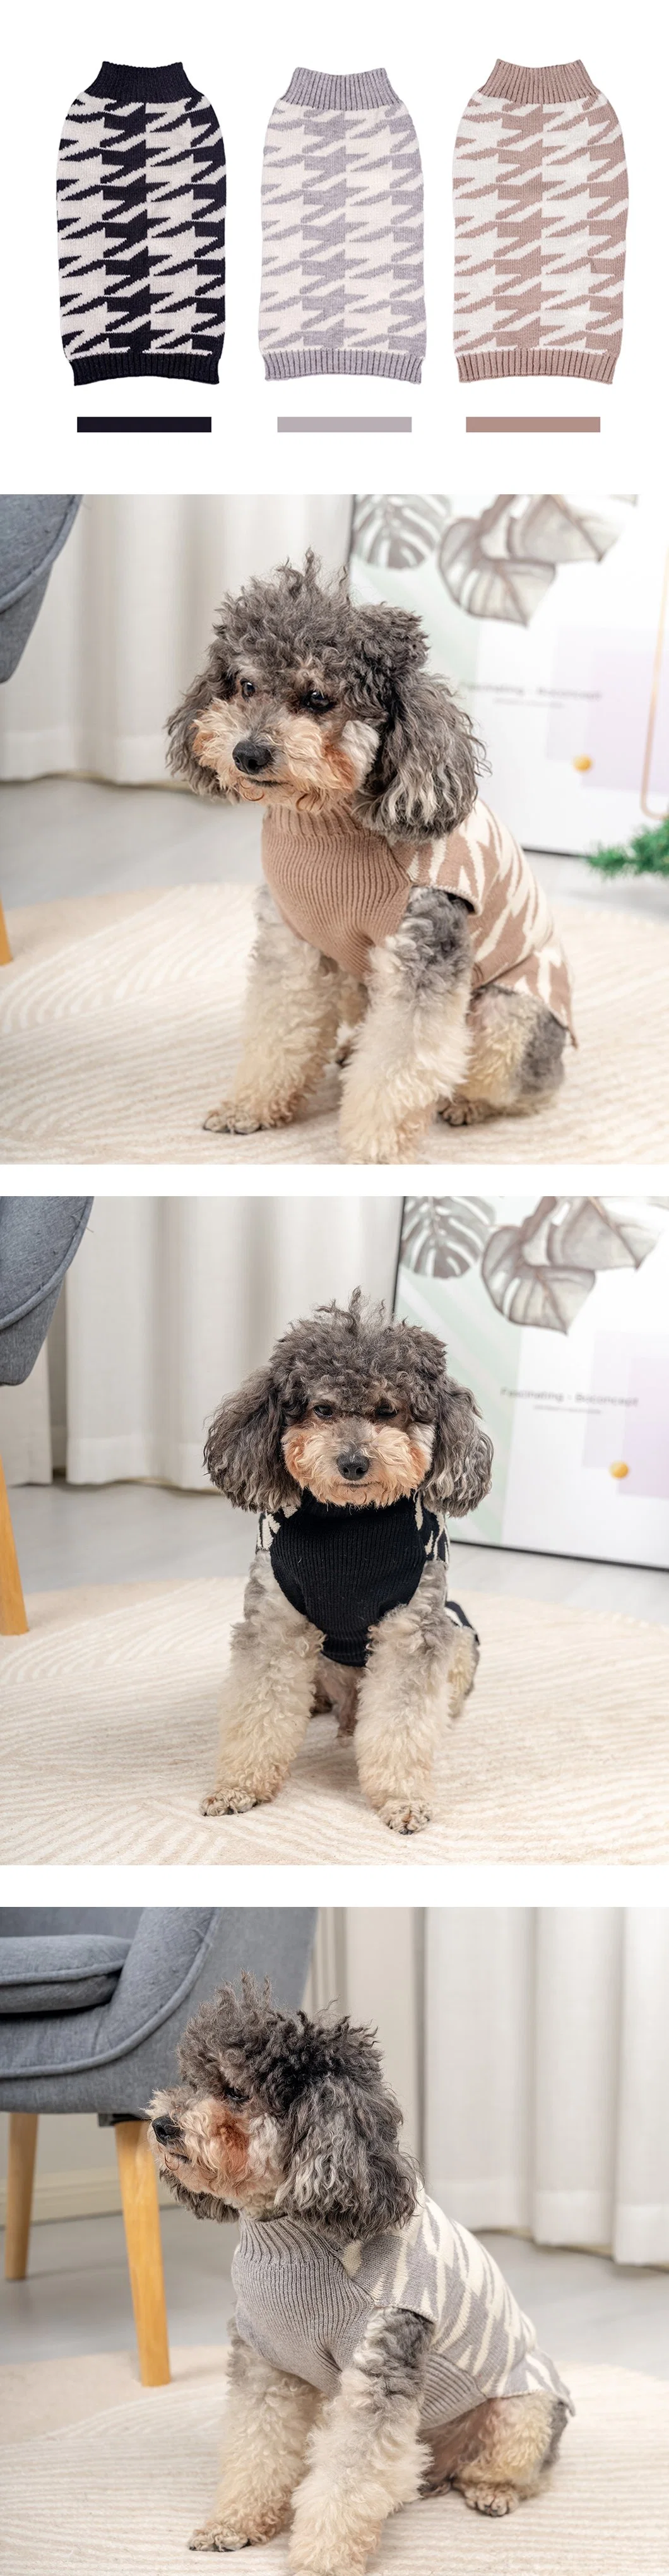 Rena Pet Lozenge Fashionable Comfortable Diamond Pattern Good Quality Warm Knitted Soft Designed Dog Sweater